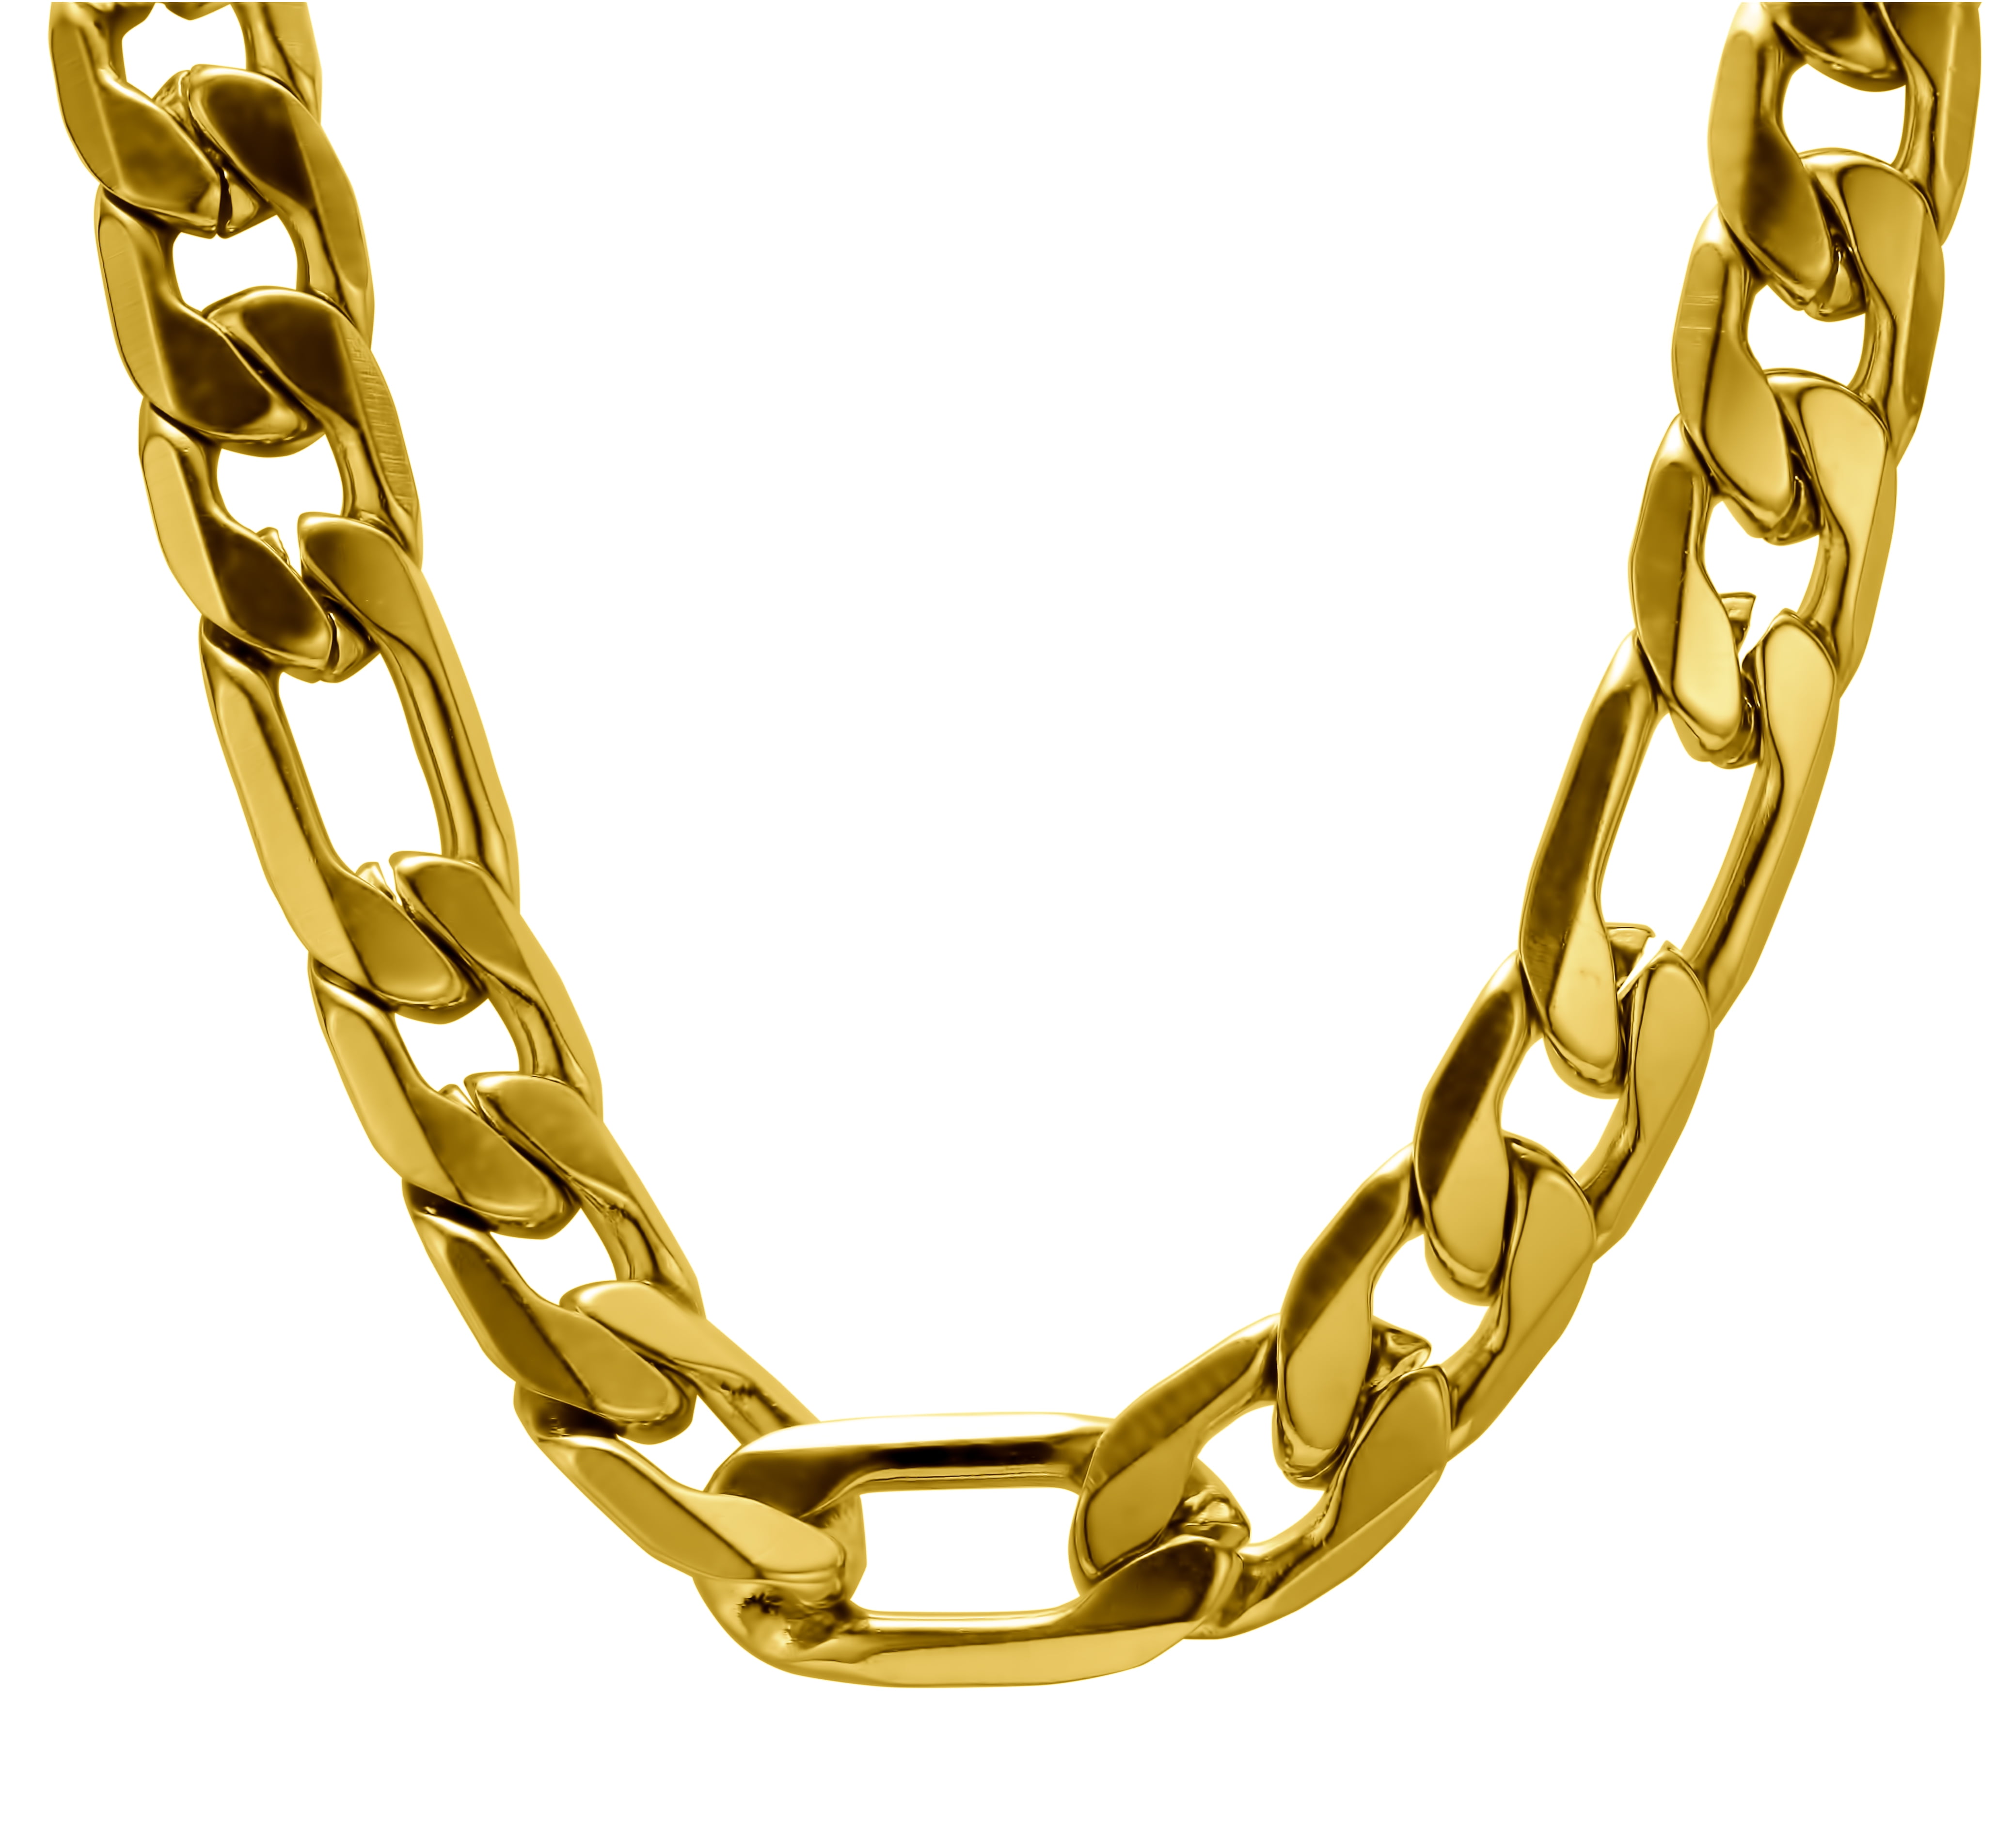 24 inch gold chain